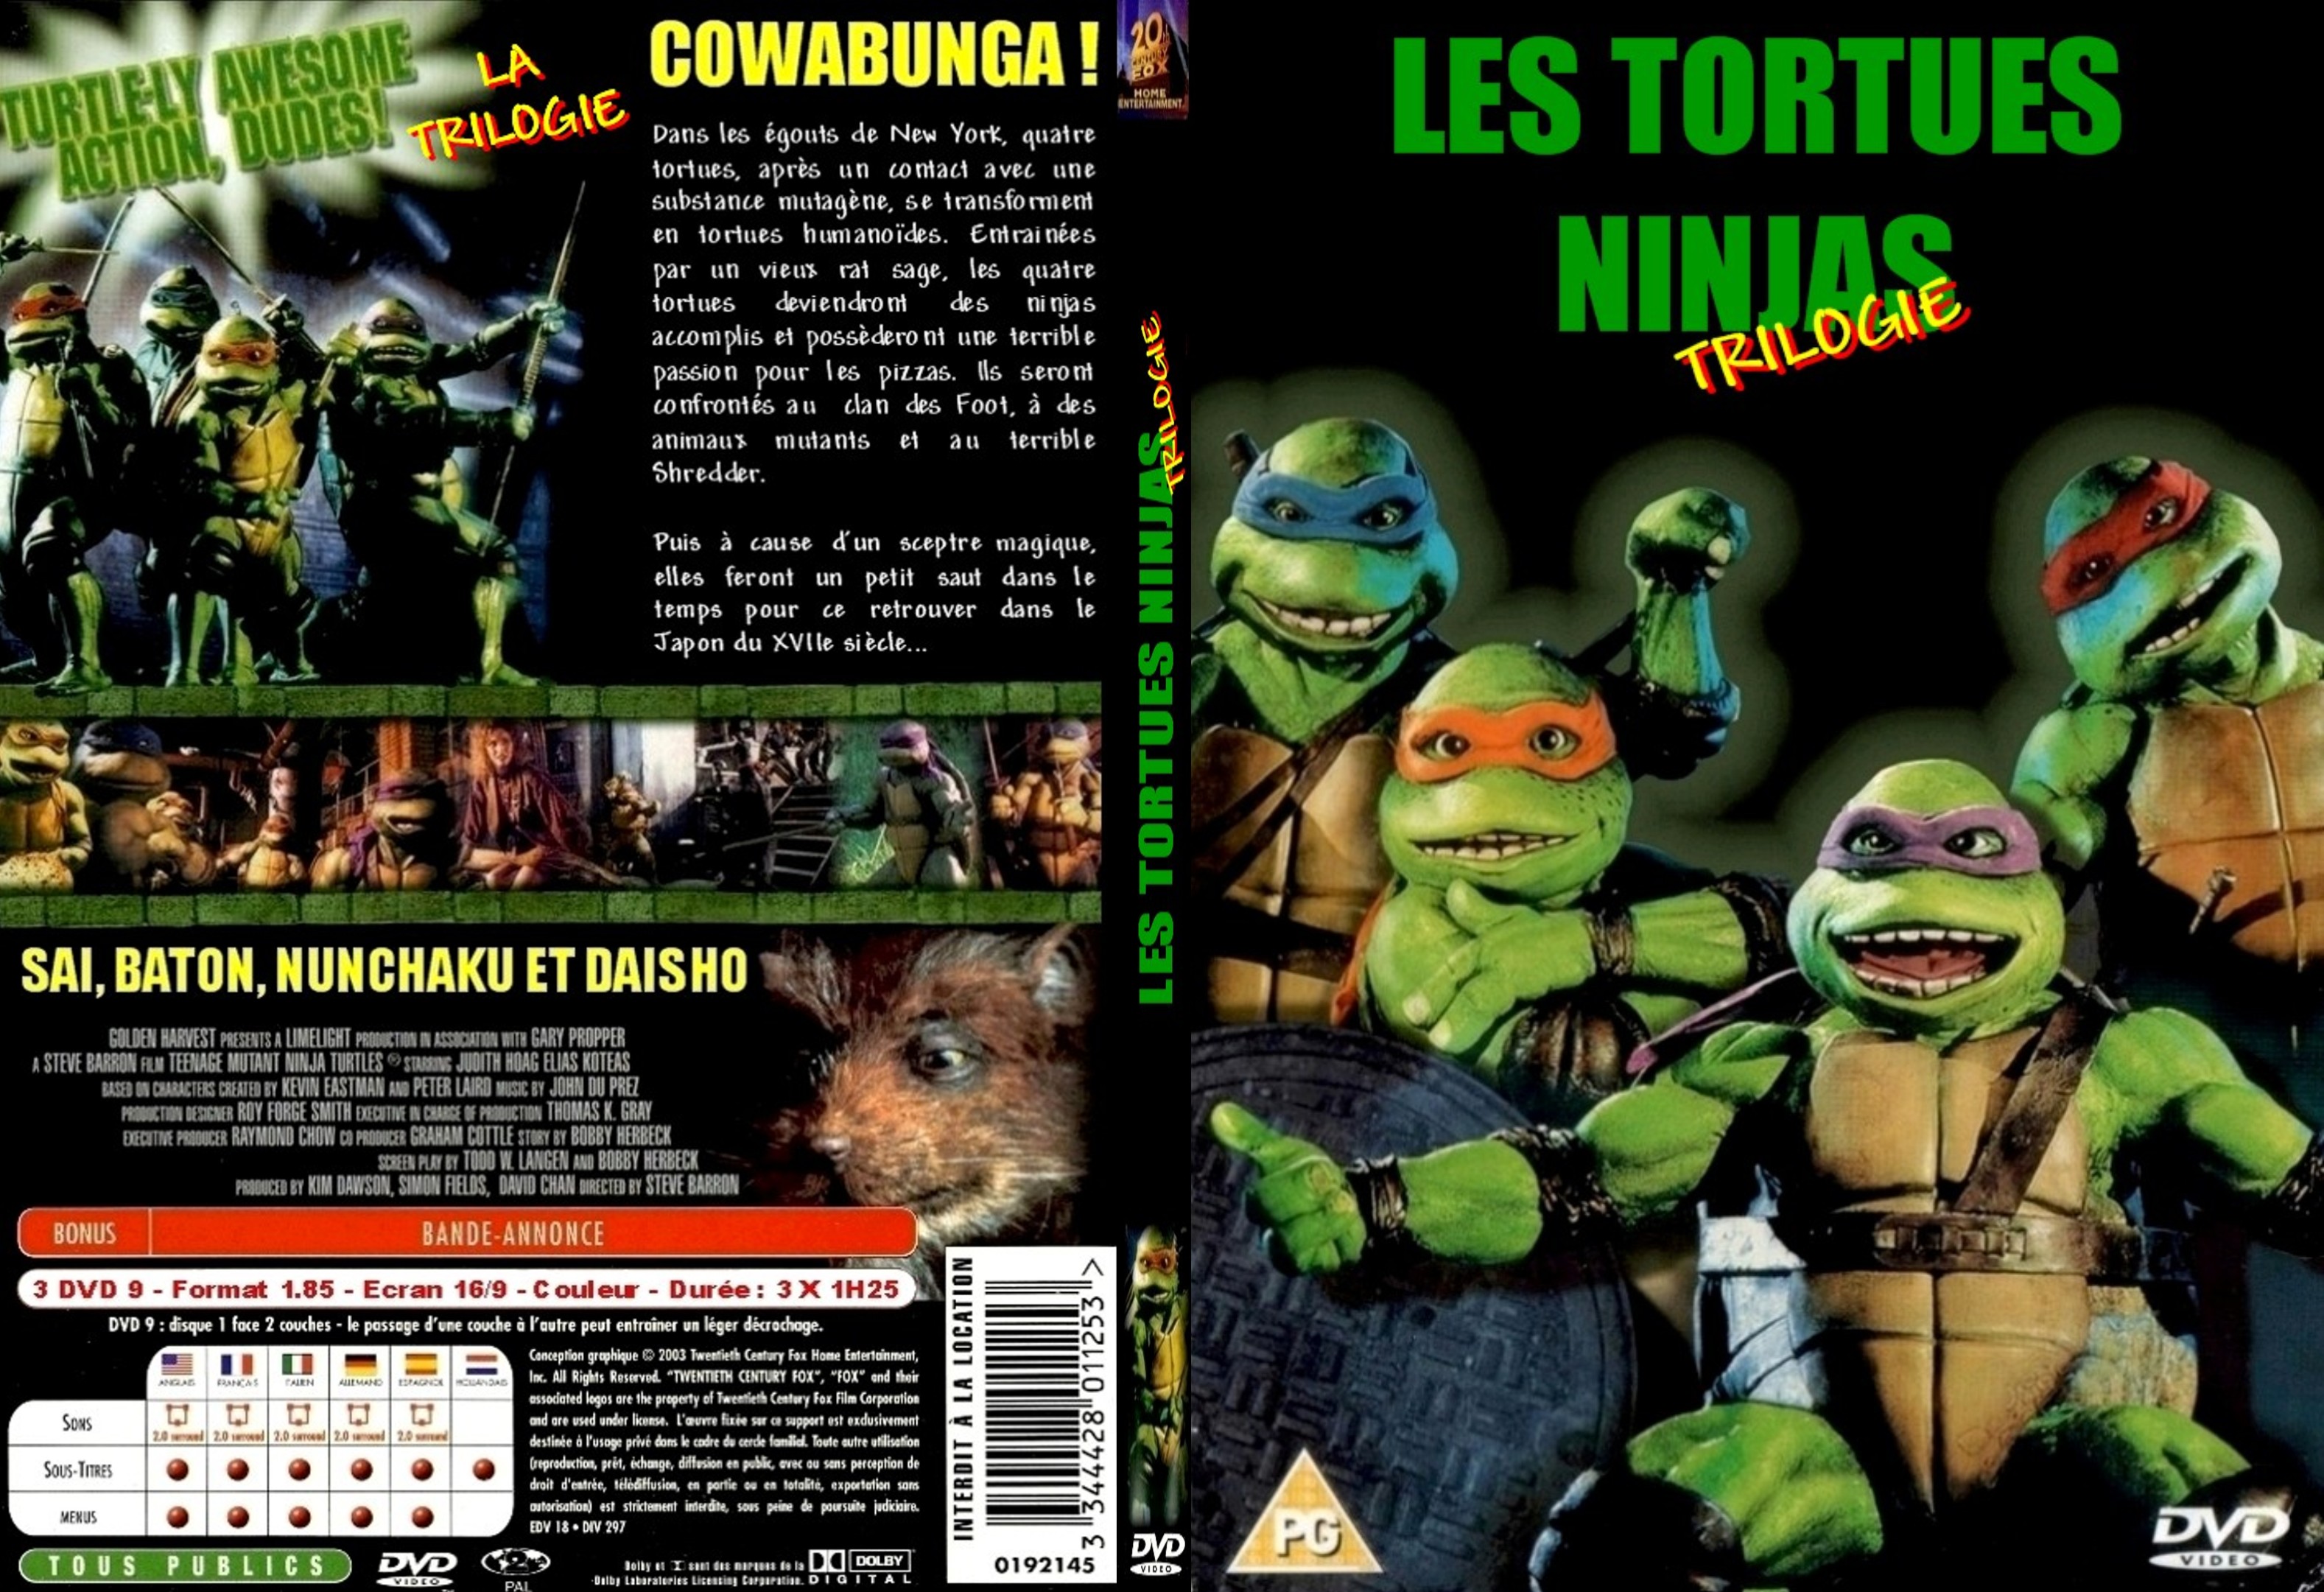 Jaquette DVD Les tortues ninjas trilogie custom - SLIM